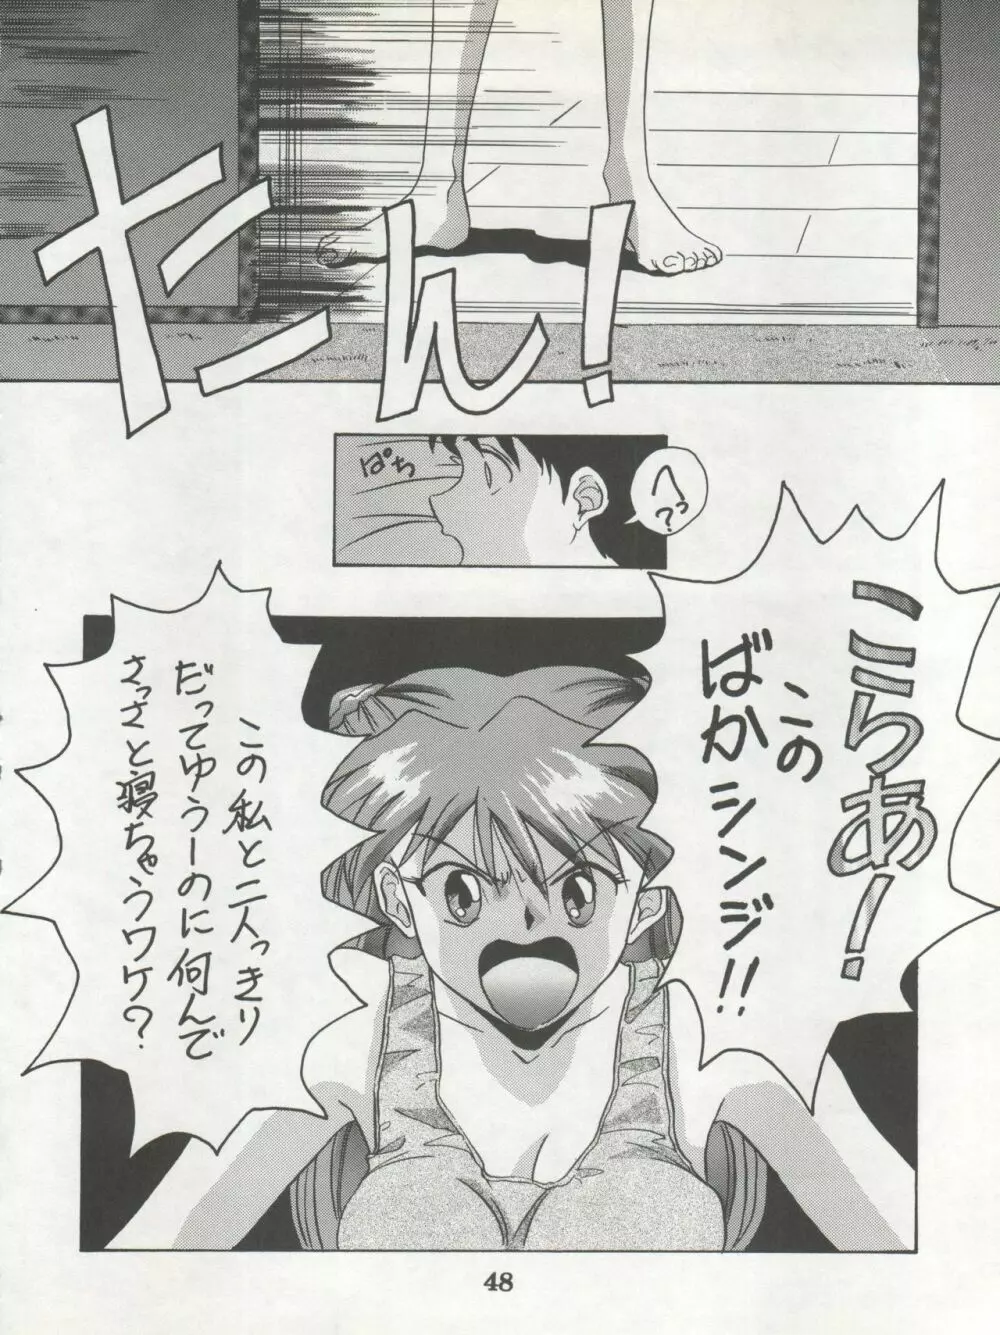 1998 SUMMER 電撃犬王 - page50